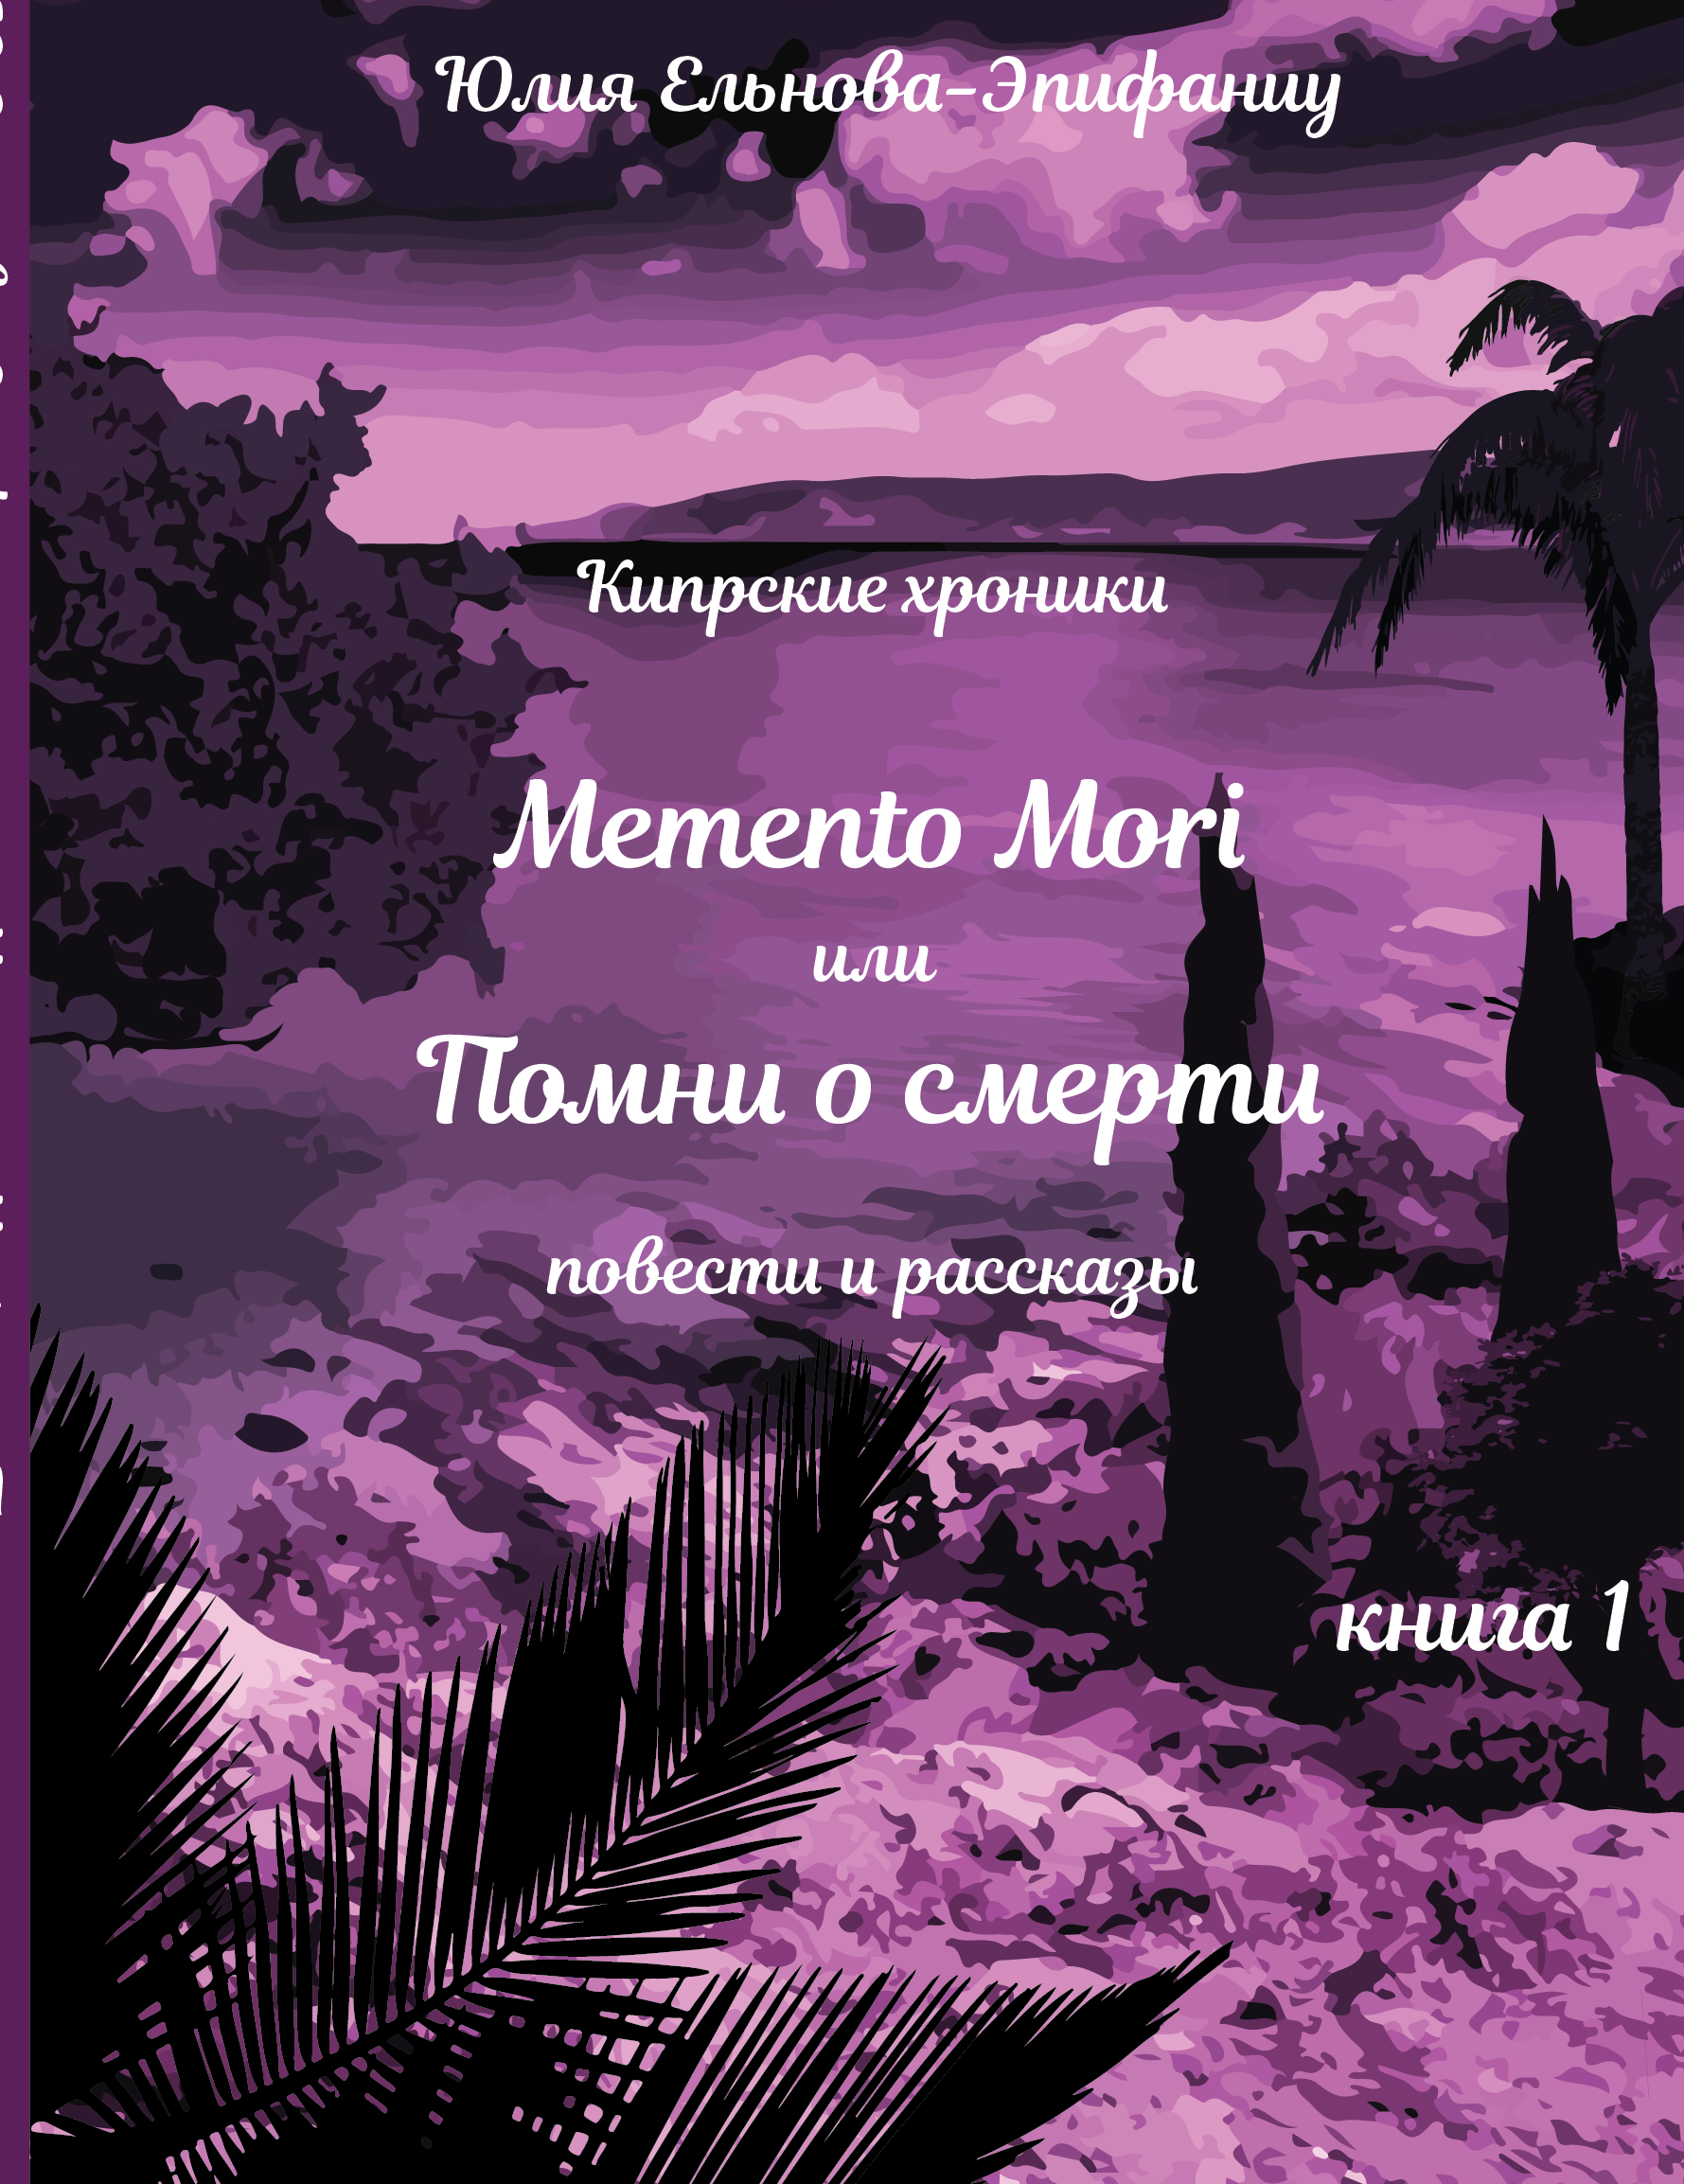 Кипрские хроники. Memento Mori, или Помни о смерти. Книга 1